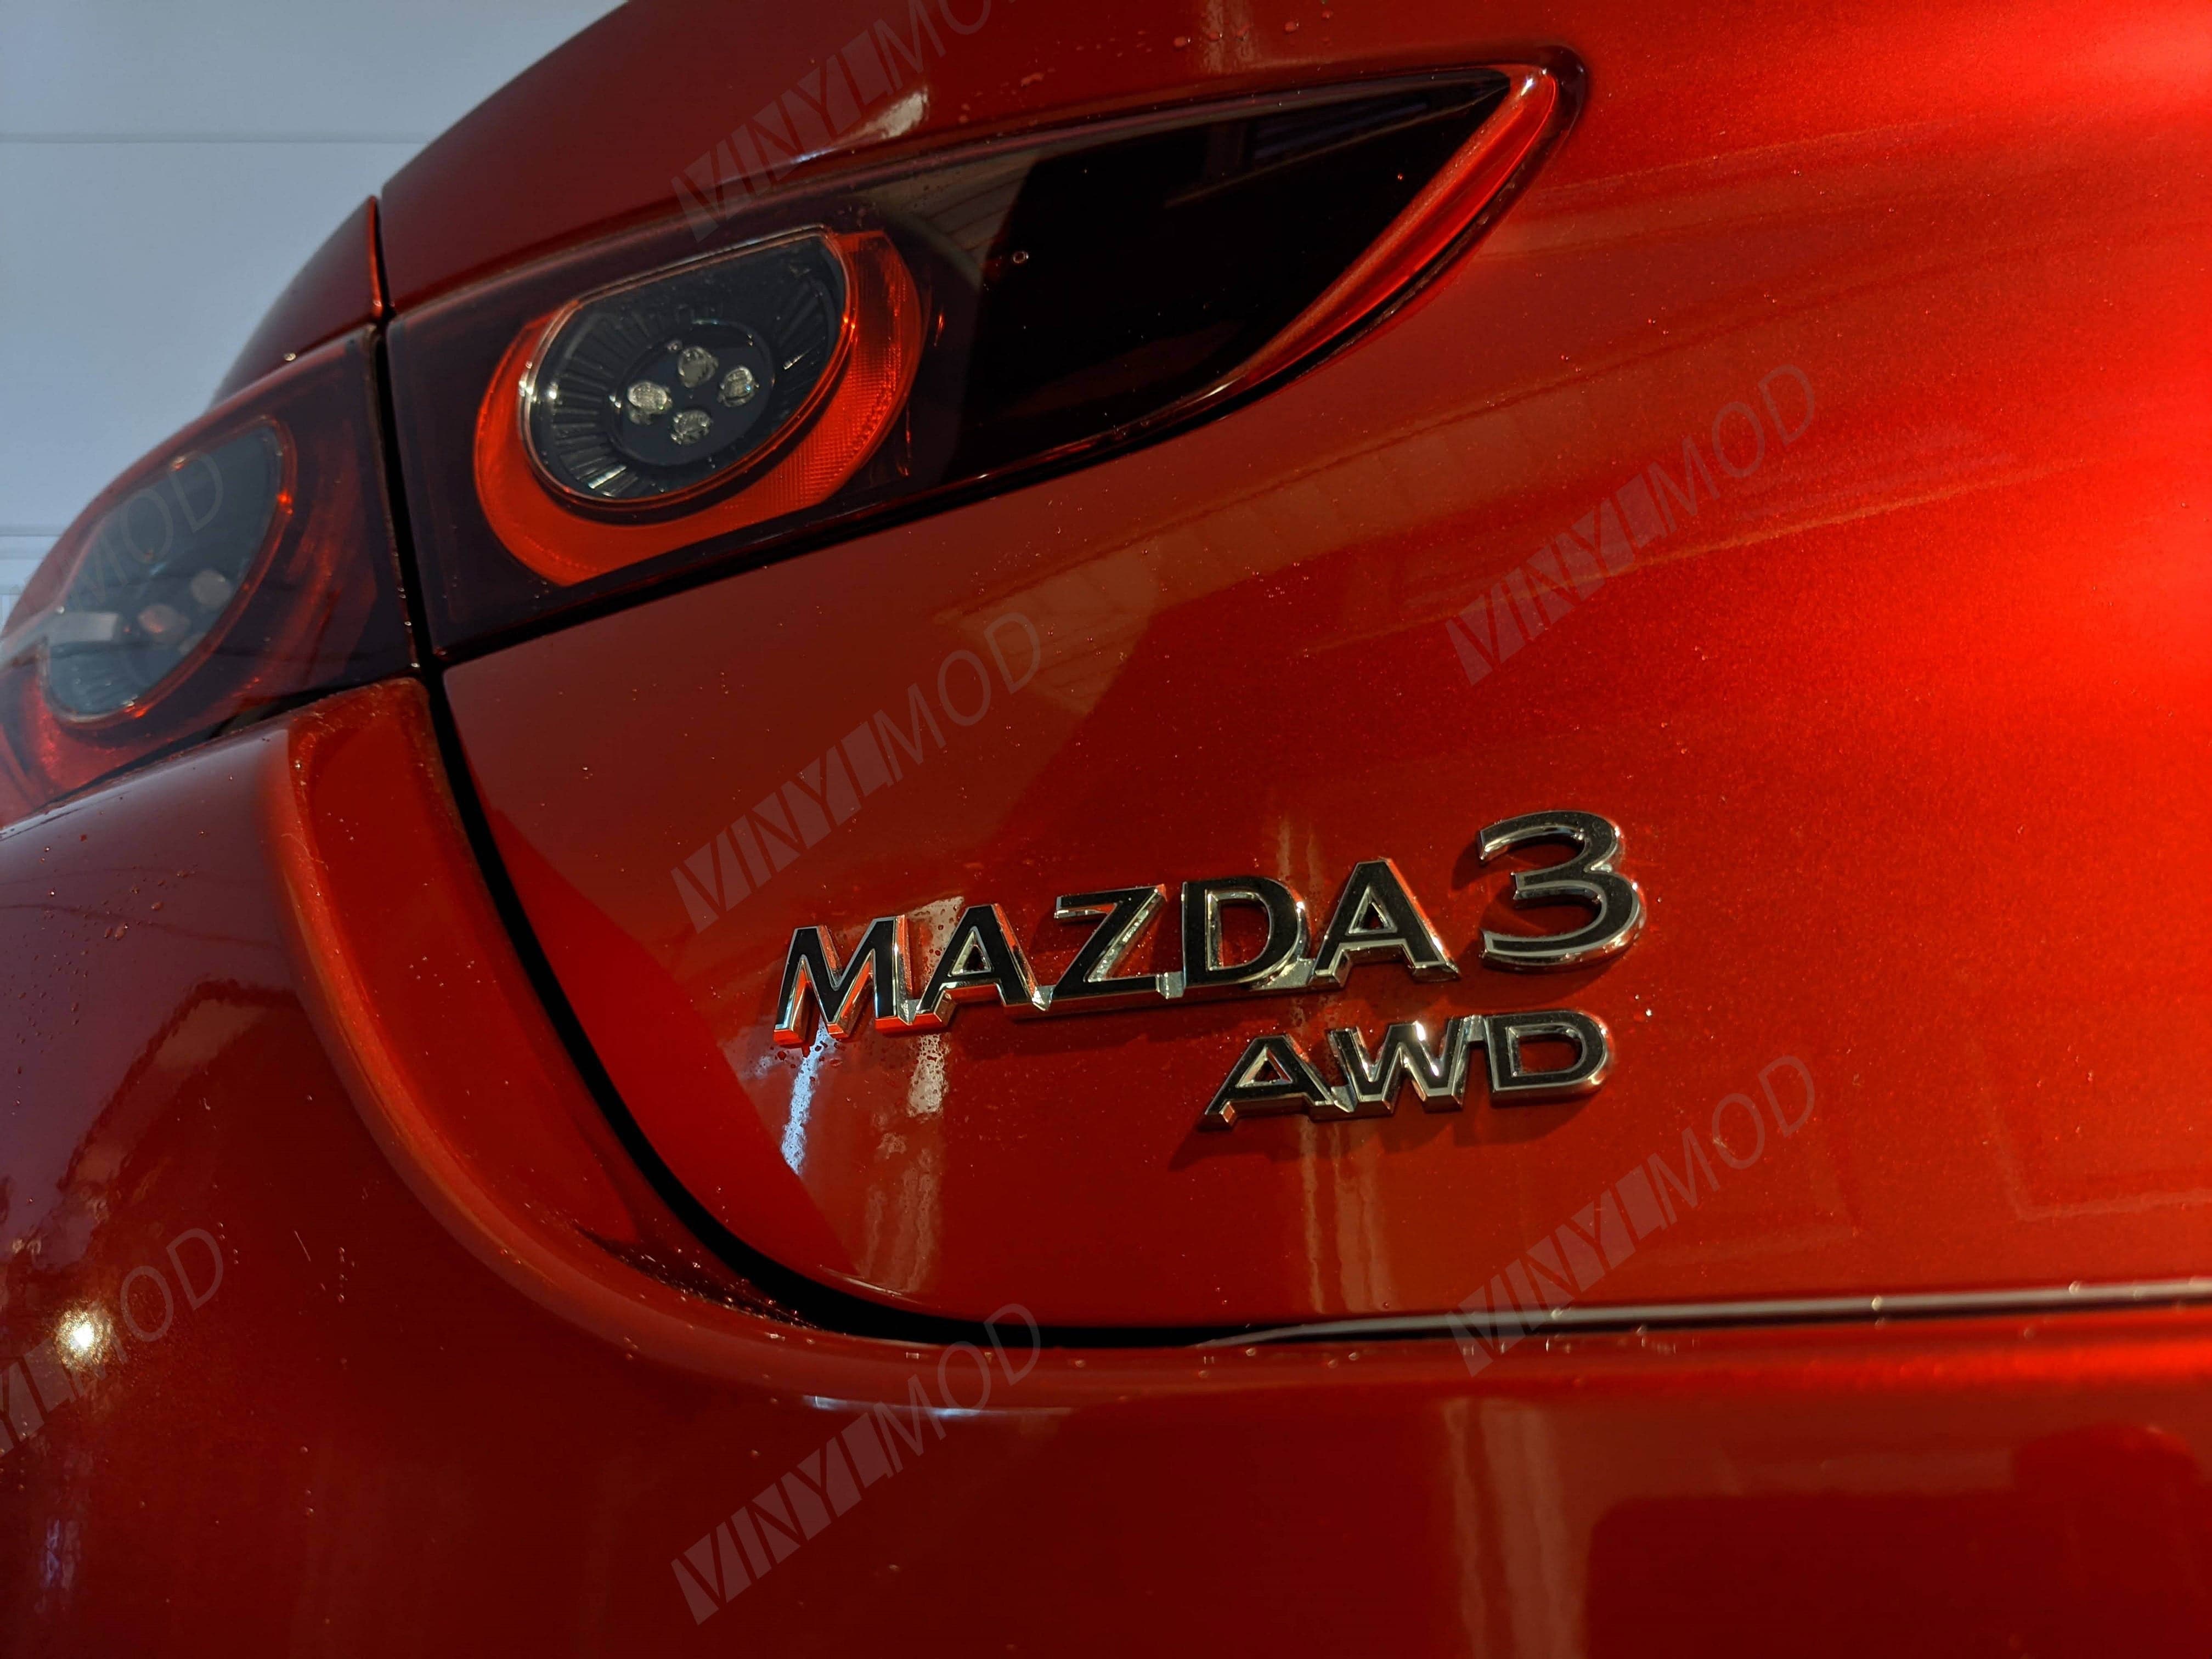 wm-Mazda3-RearMazda3AWDOverlaysComboVinylMod-Black.jpg